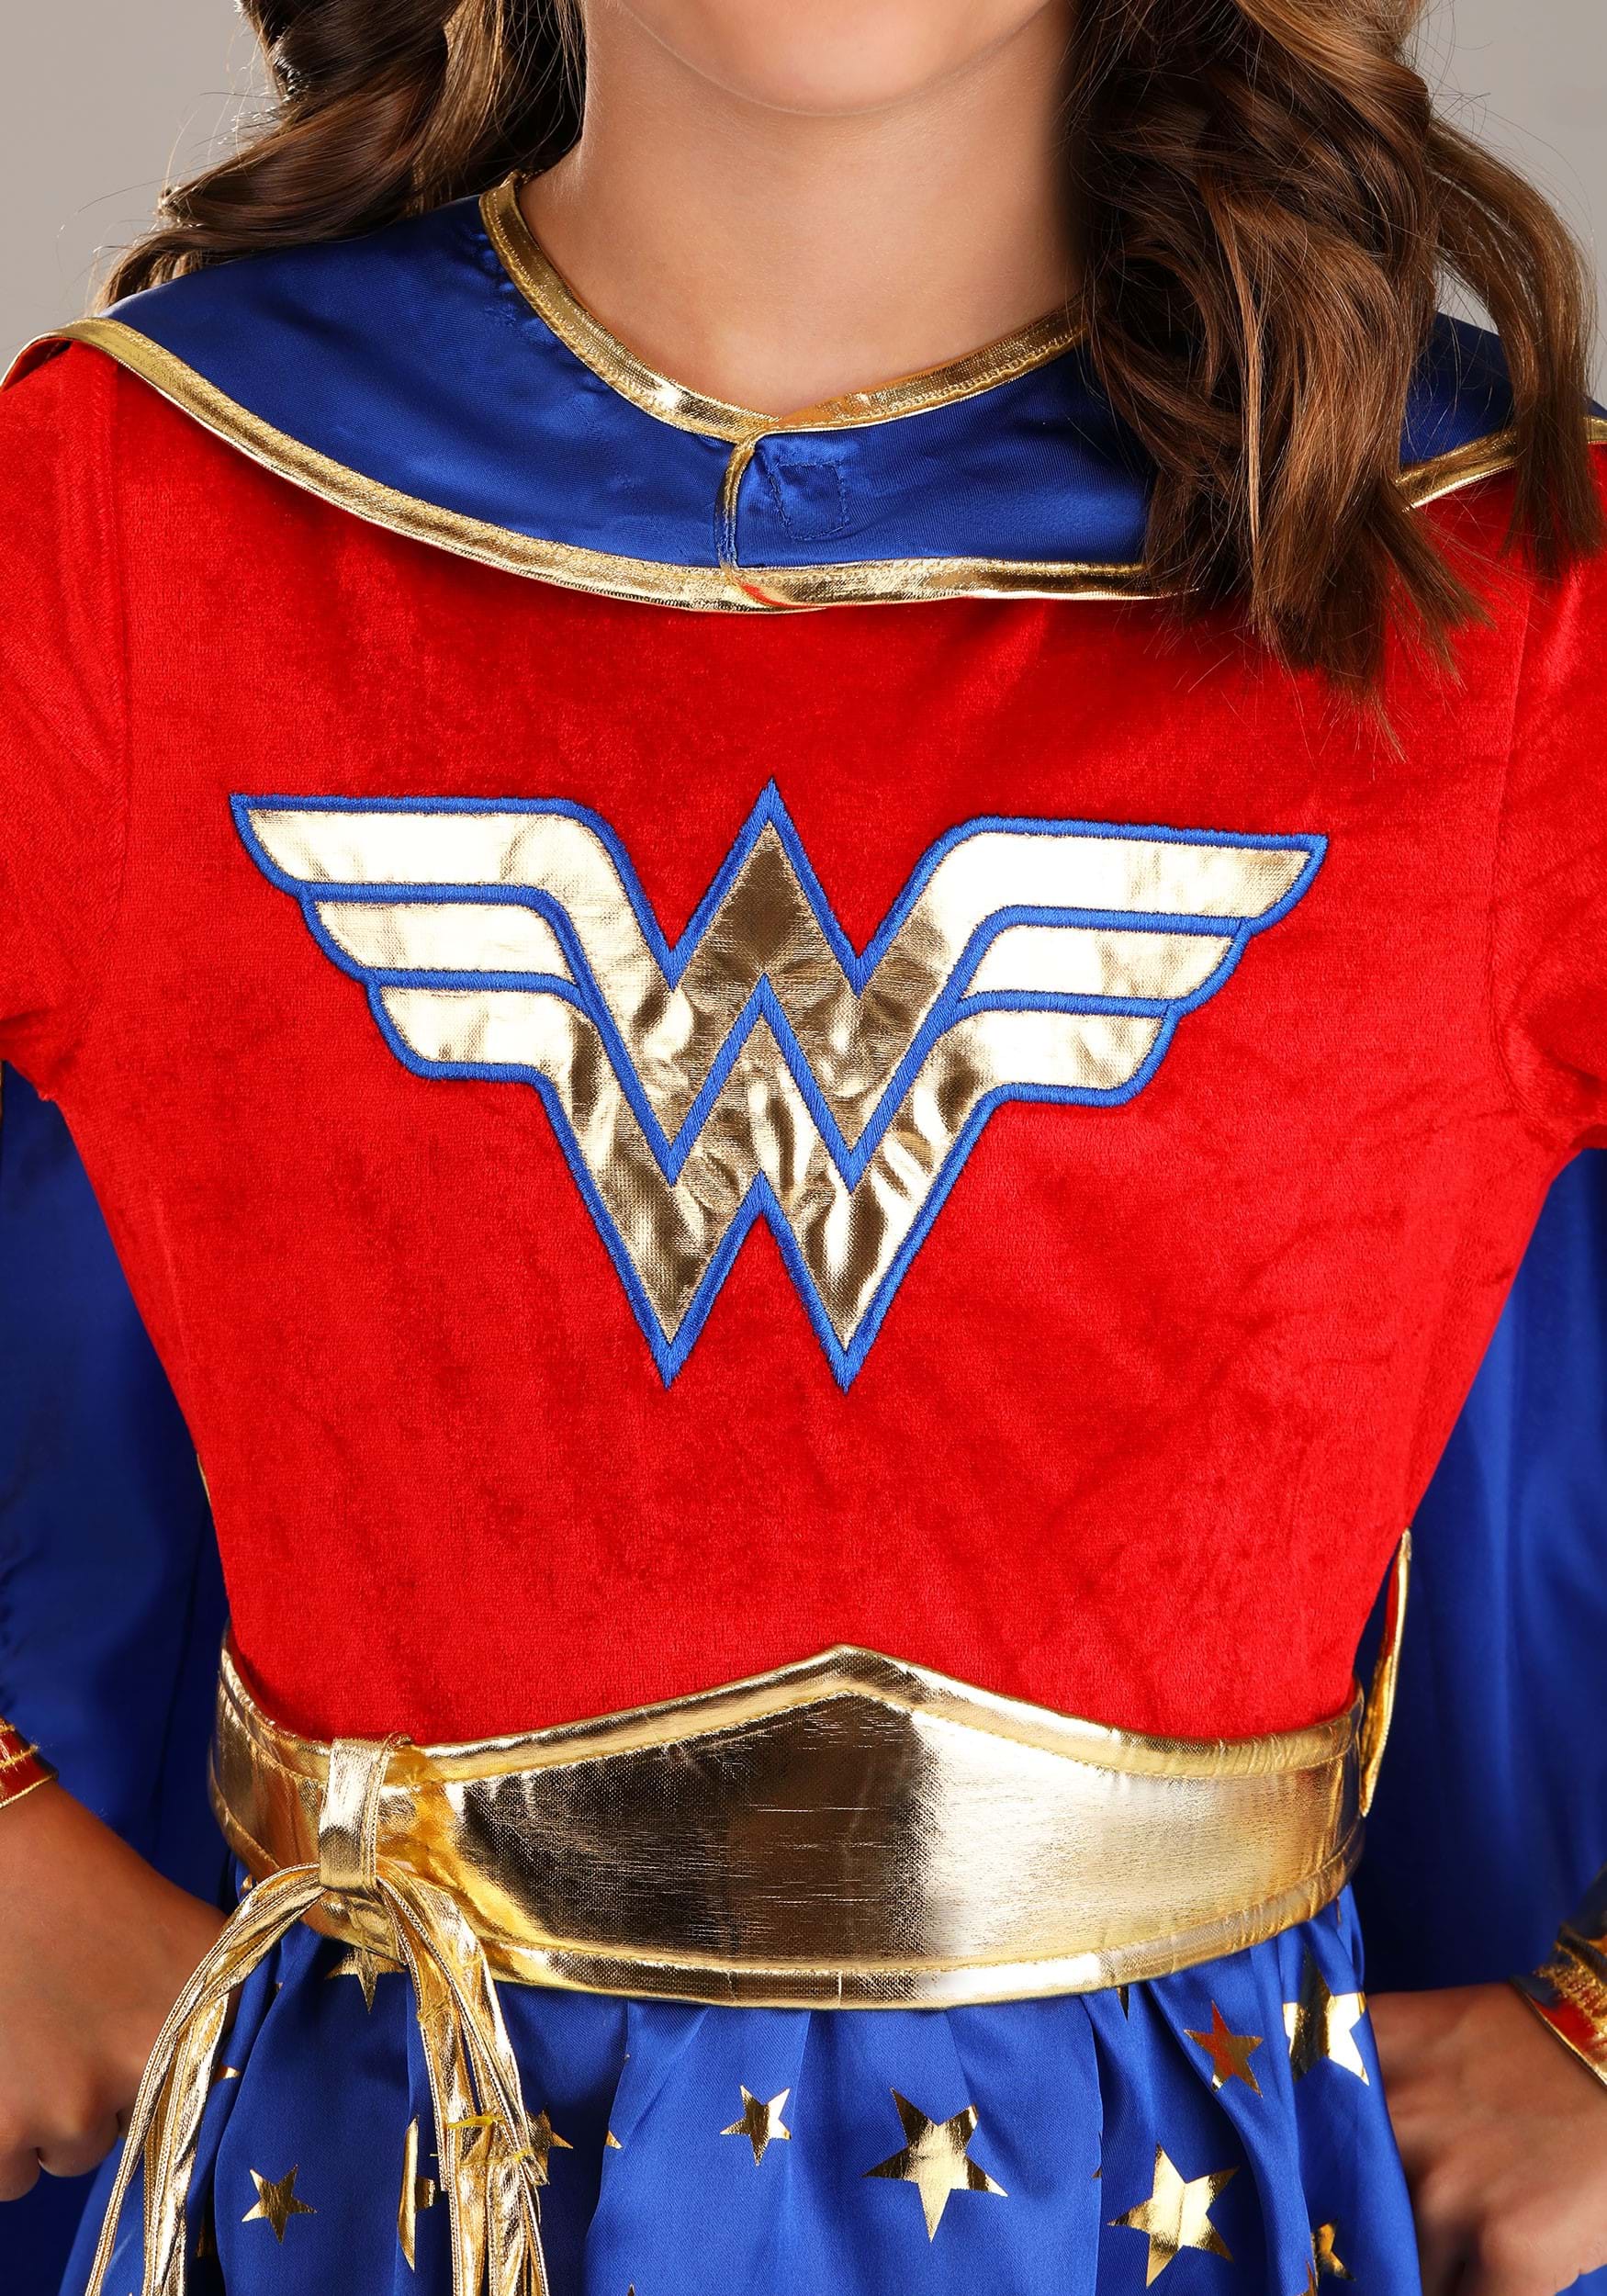 Wonder Woman Girl's Long-sleeved Dress Costume | Kids | Girls | Orange/Red/Blue | S | Jerry Leigh